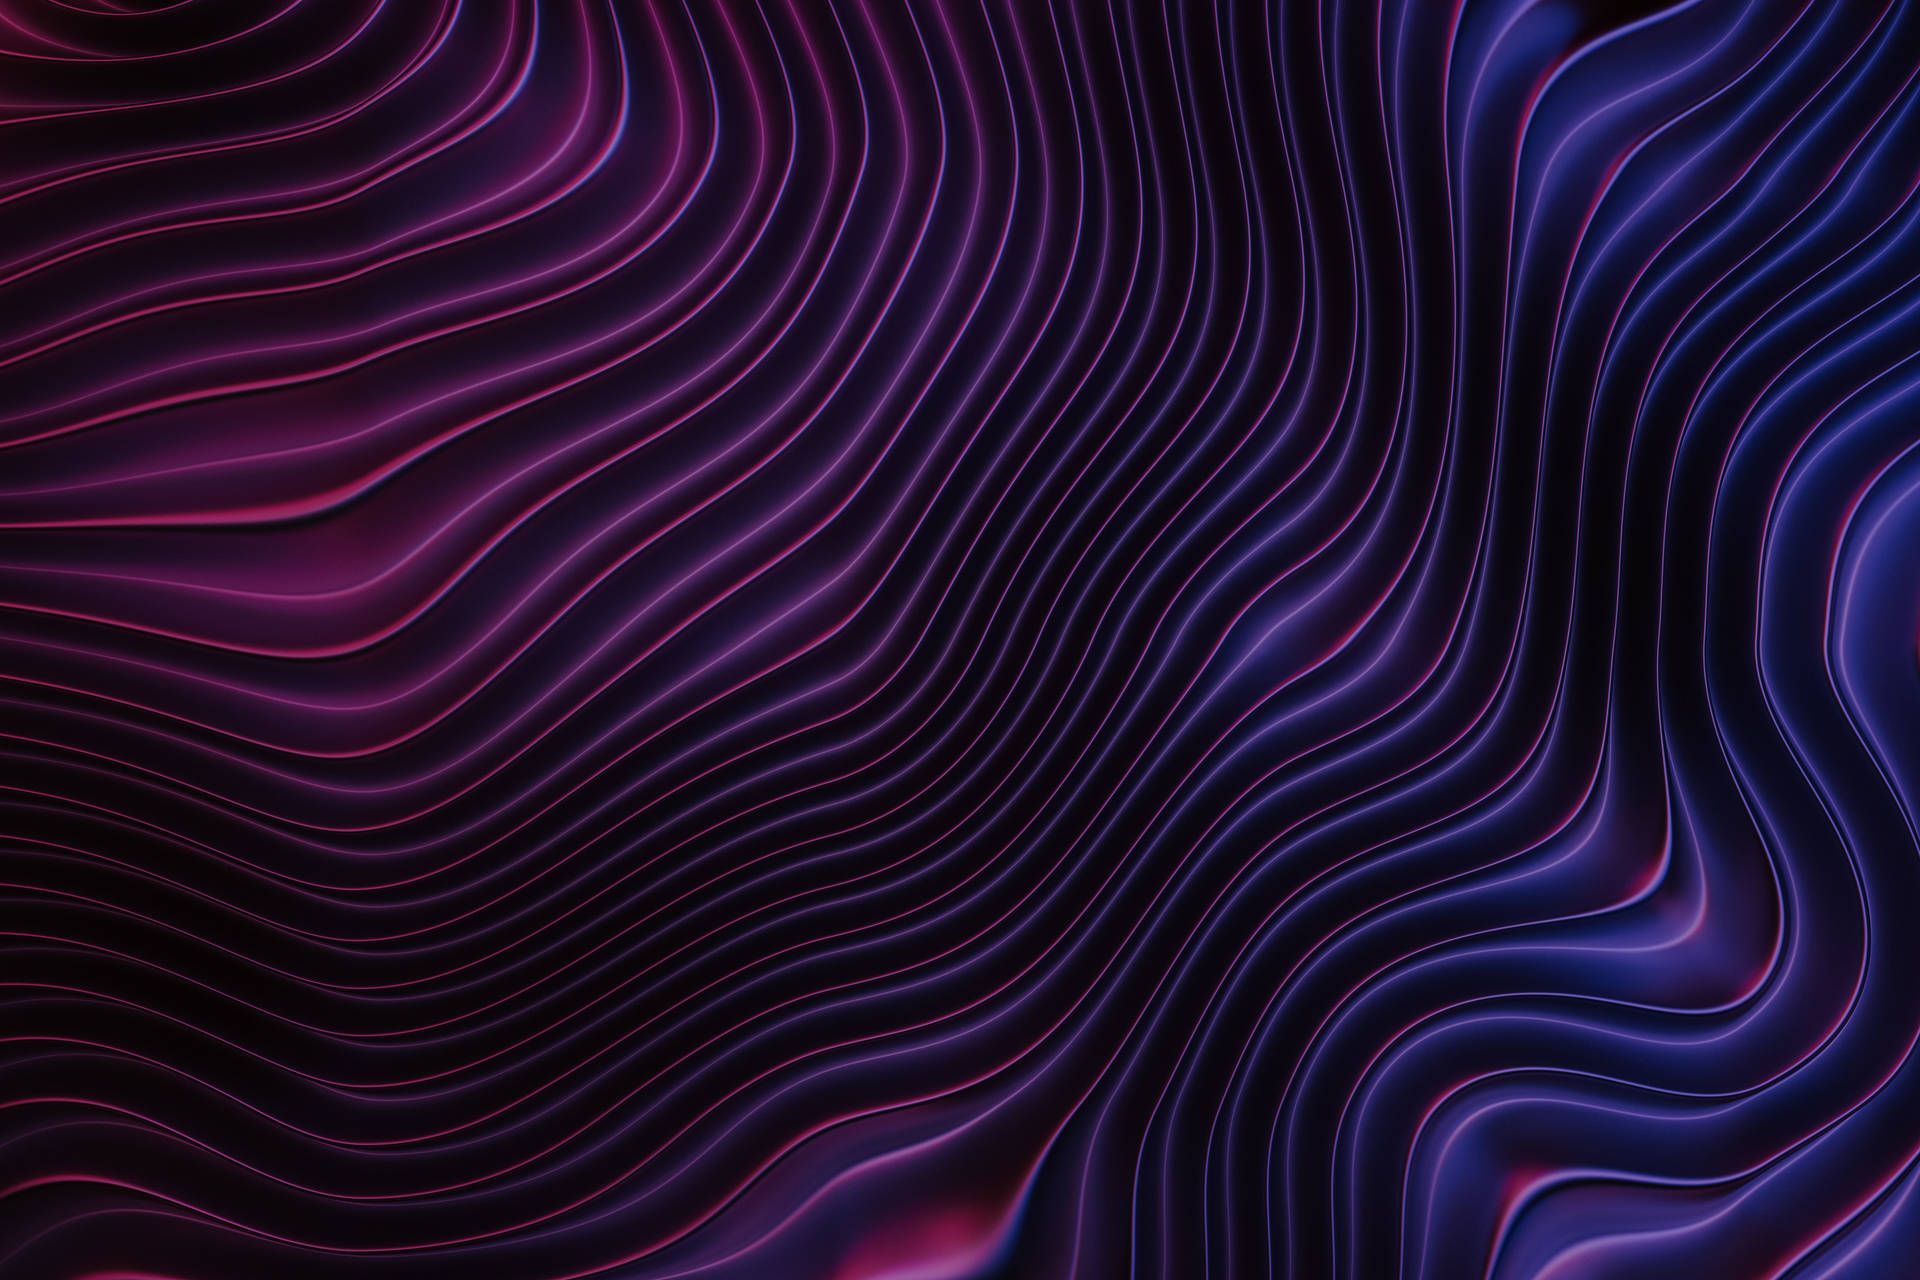 Neon Purple Aesthetic Wallpaper Full HD, 4K Free to Use